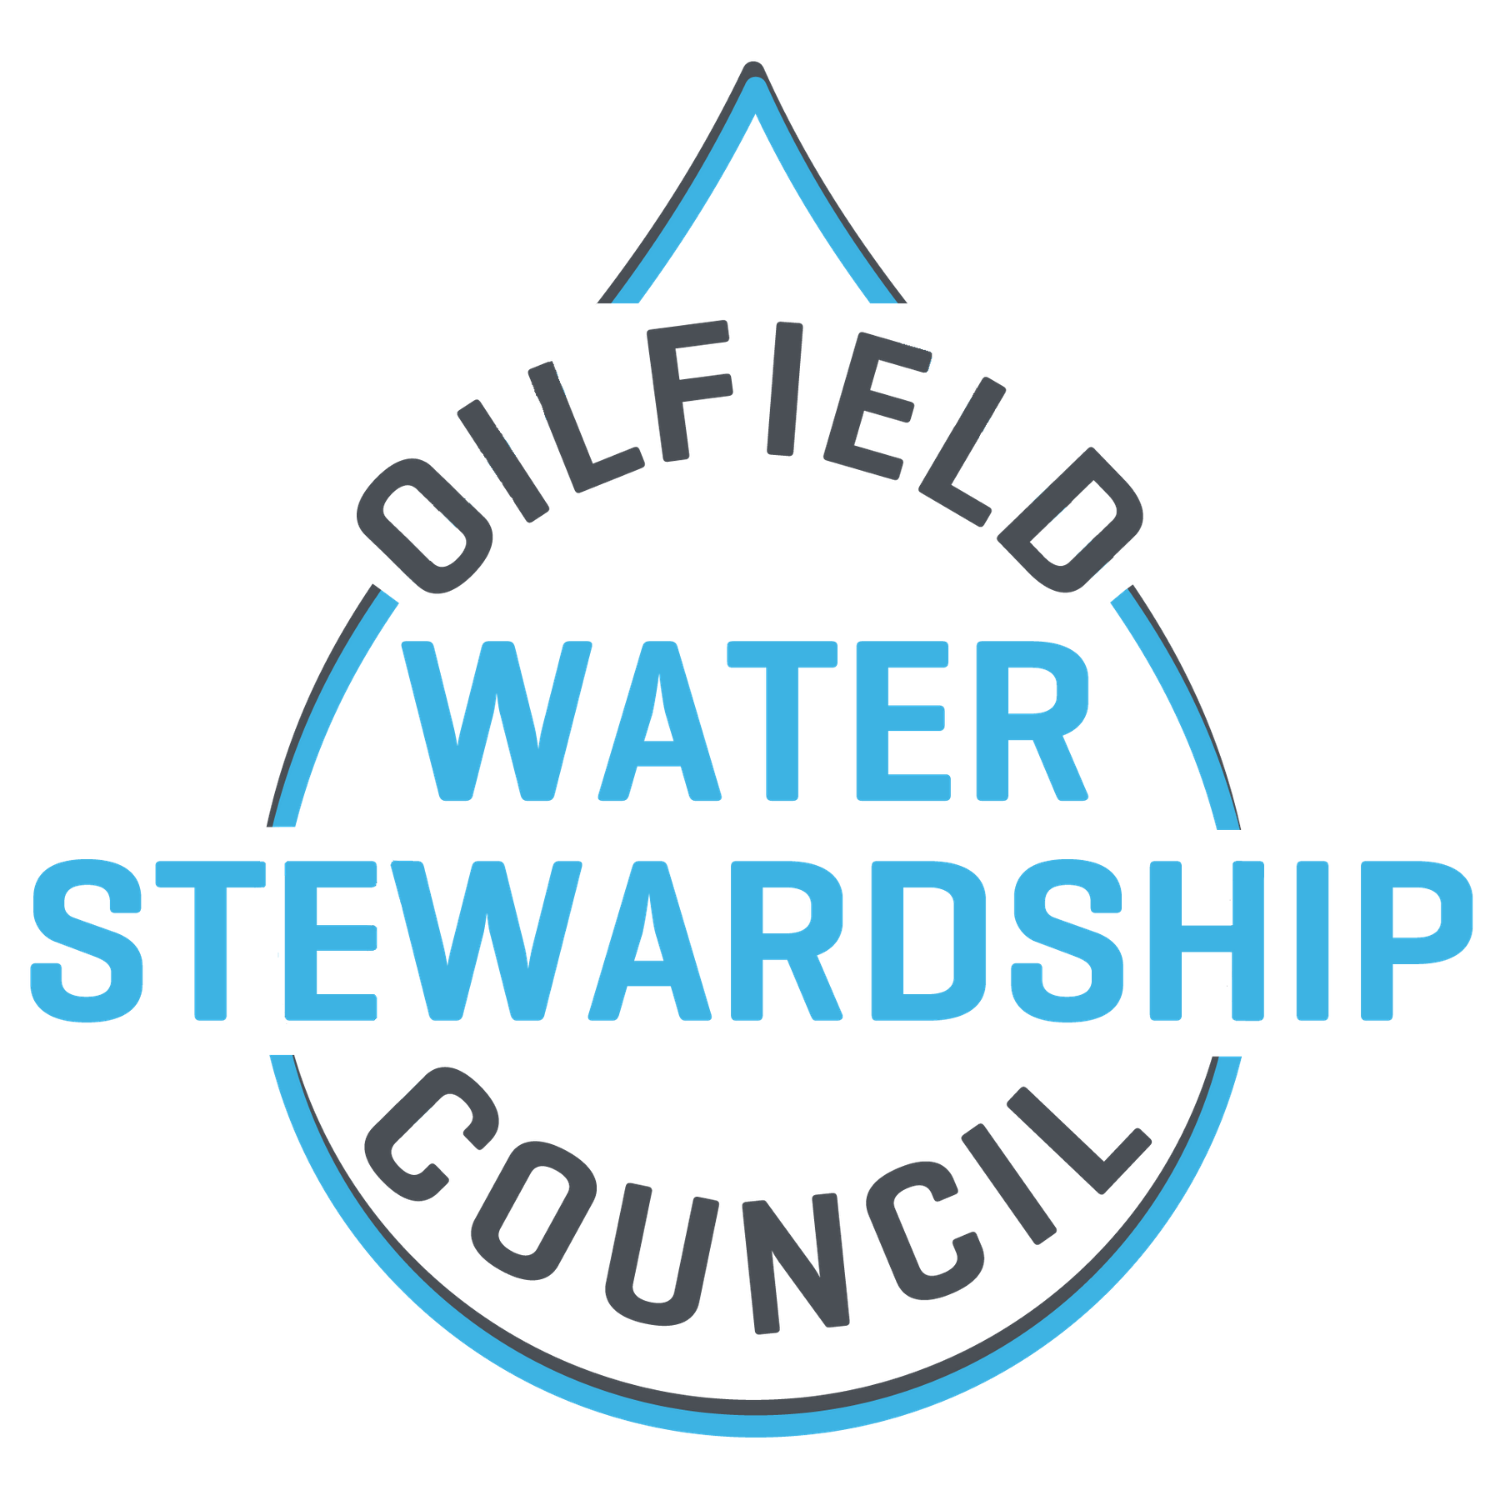 OWSC Oilfield Water Stewardship Council